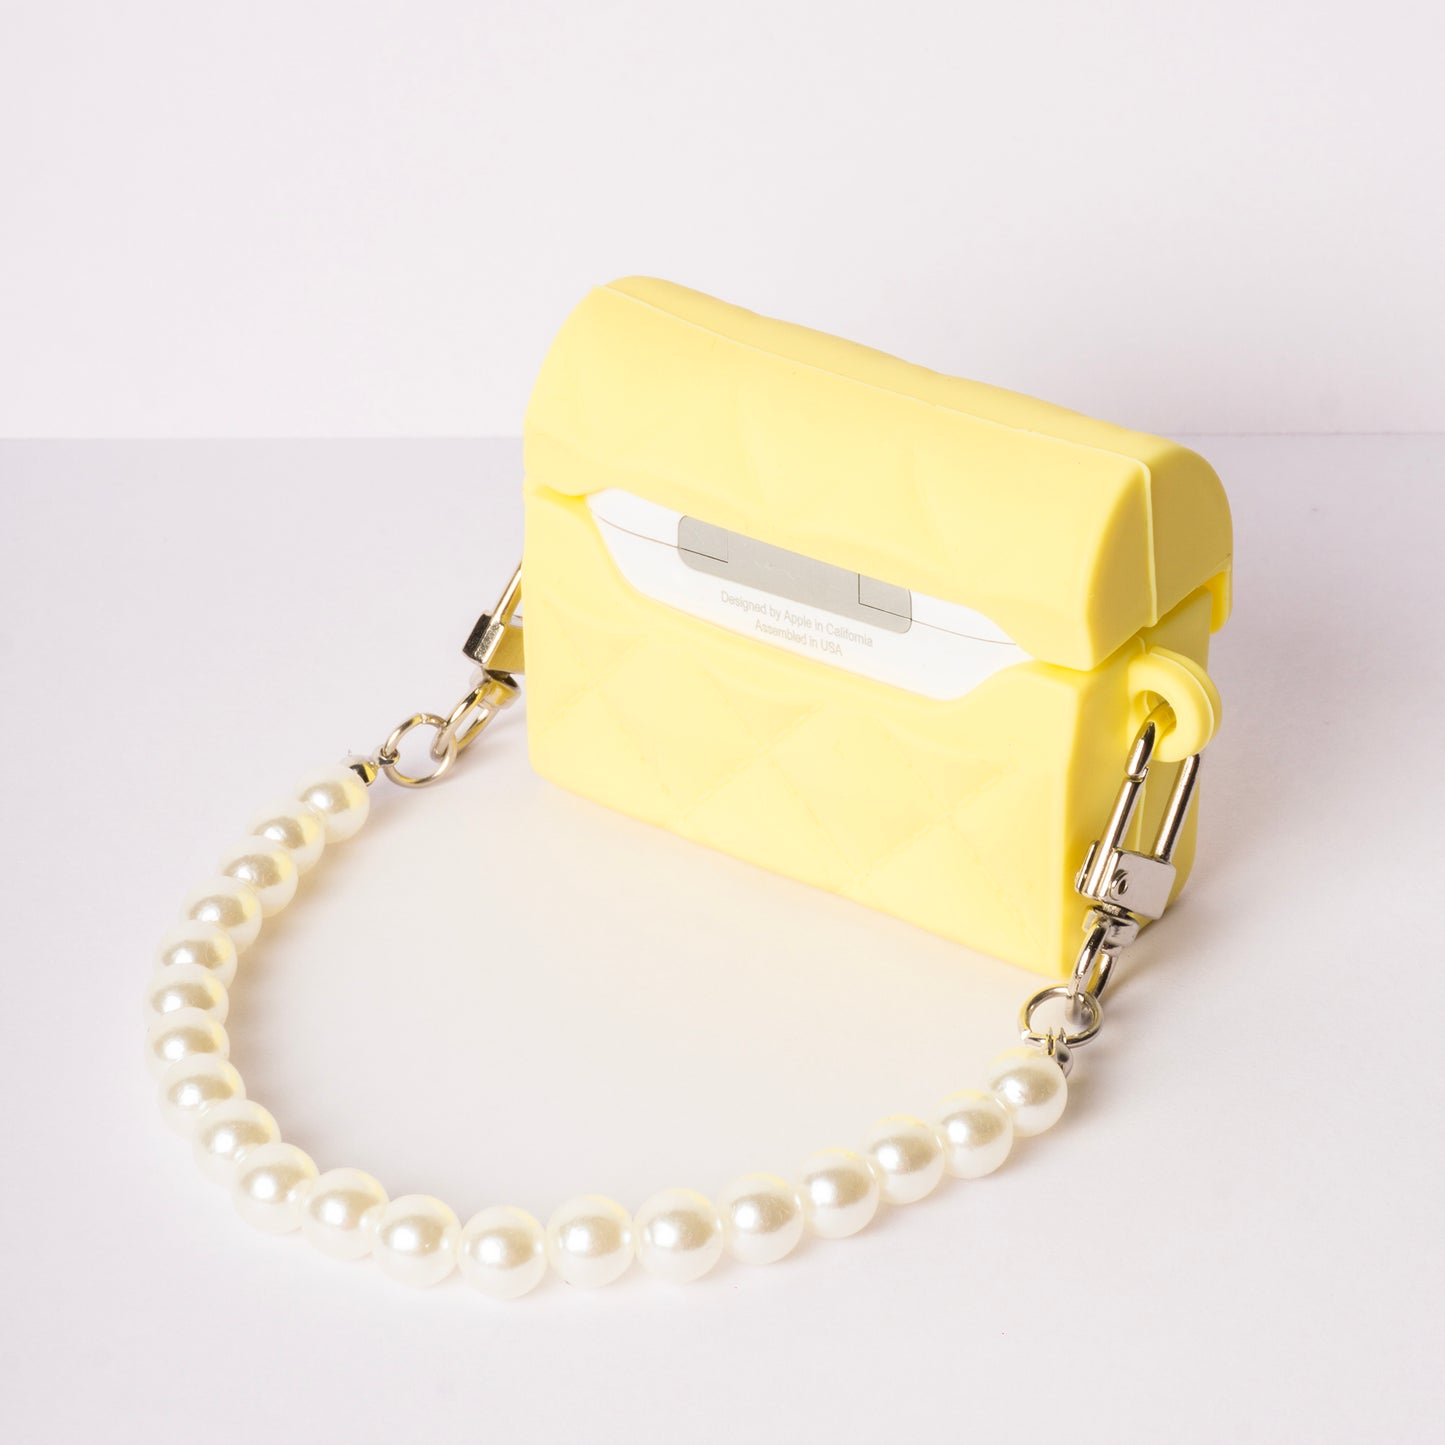 Chanel Yellow Handbag Silicon Cover